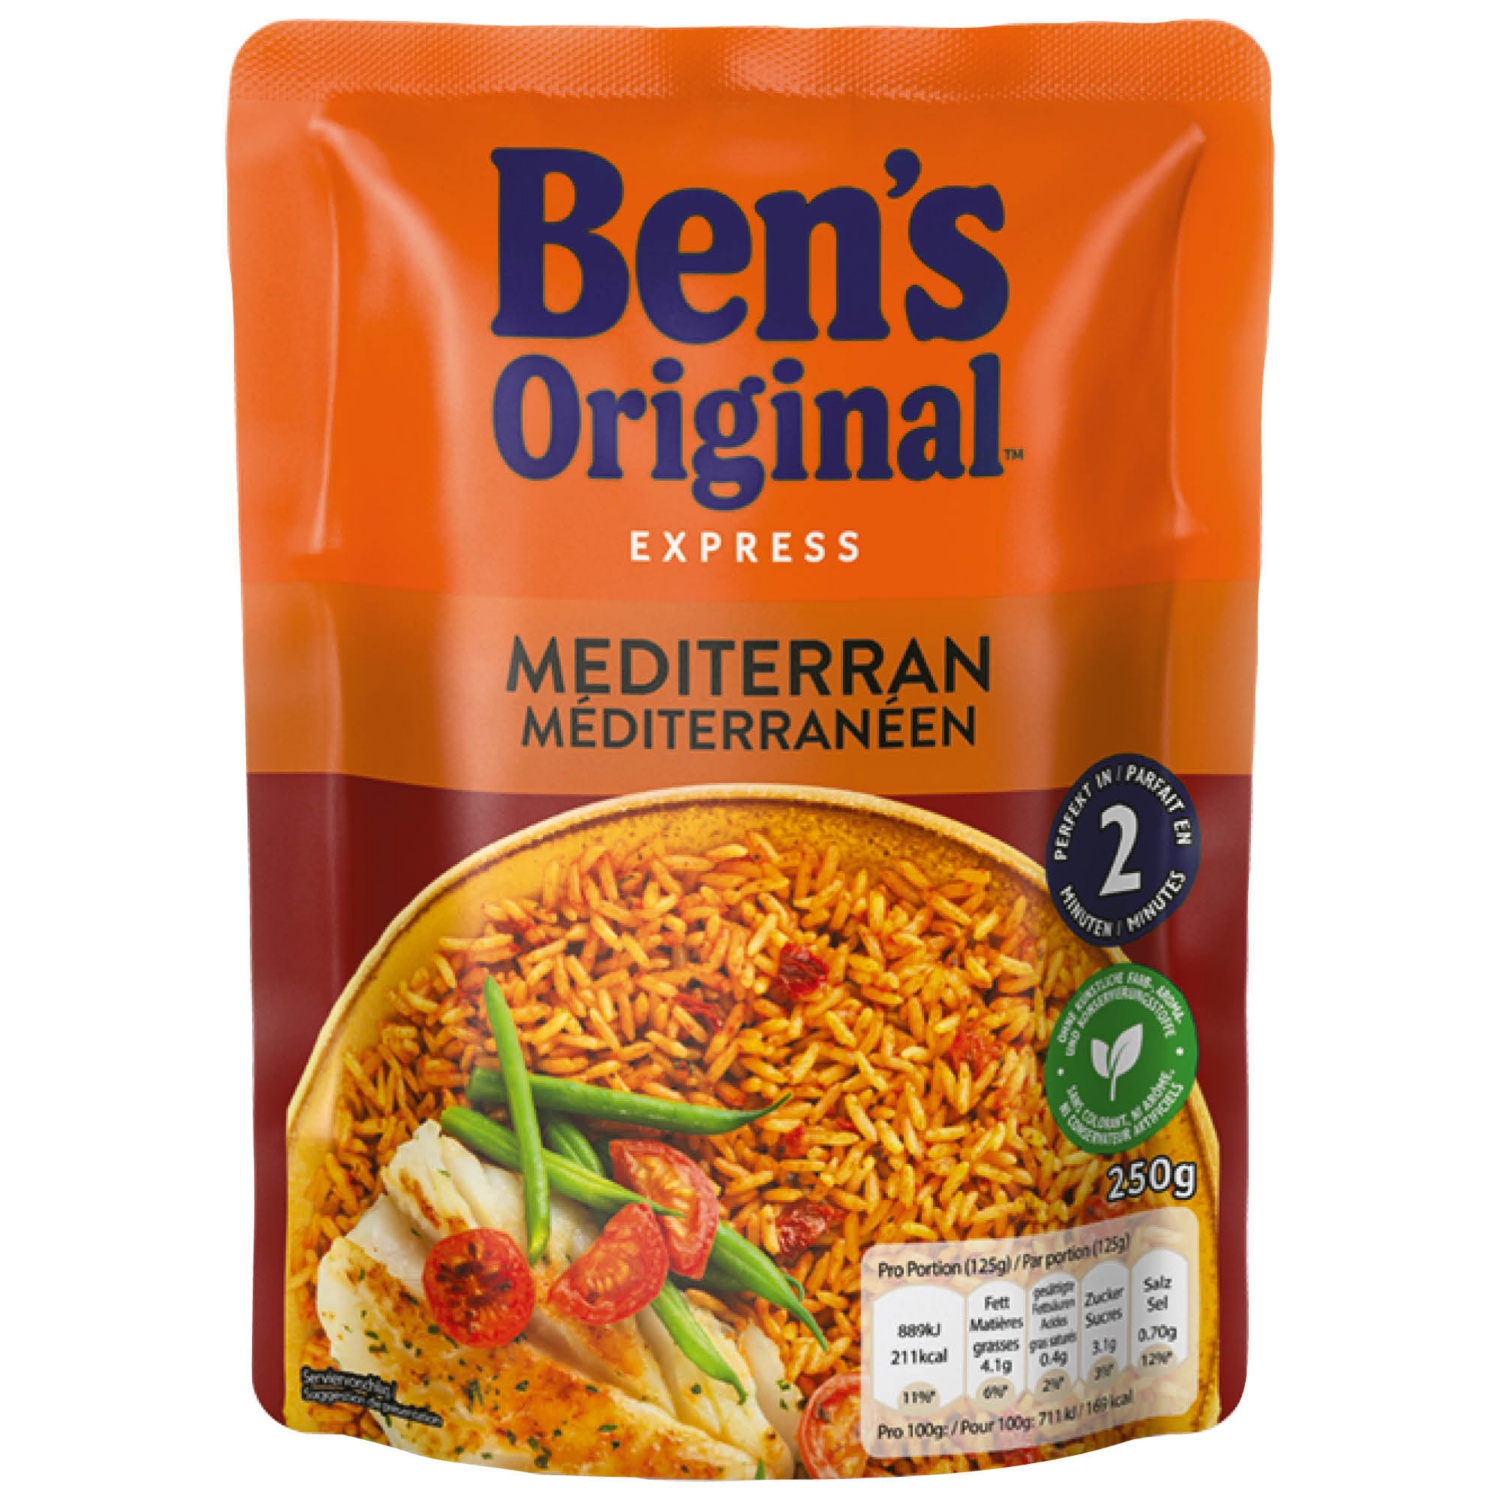 BEN'S ORIGINAL Bens express rice, Mediterran